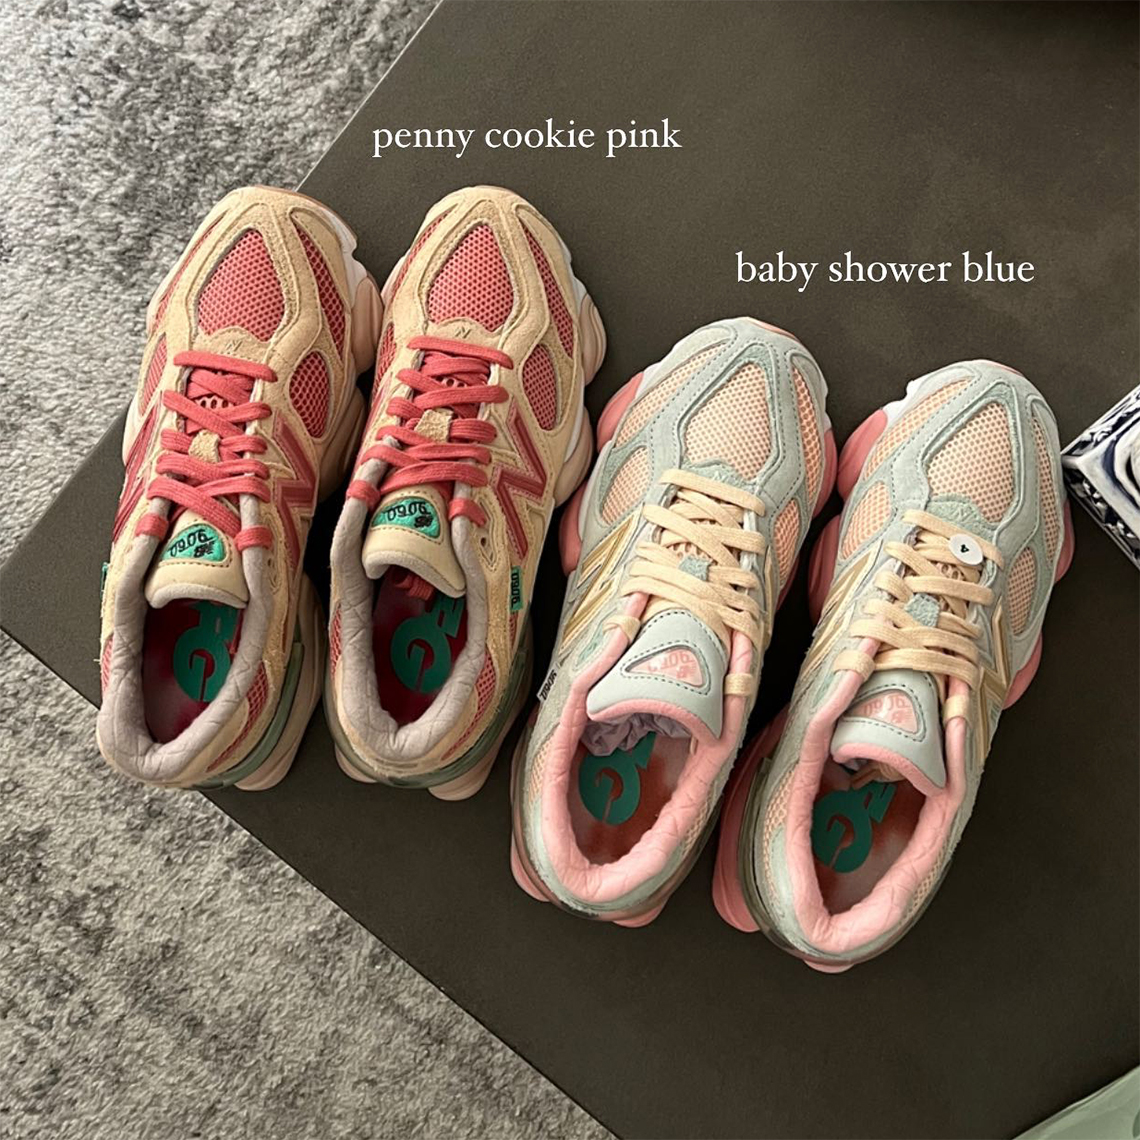 Joe Freshgoods New Balance 415 Marathon Running Shoes Sneakers WL415GW Baby Shower Blue Penny Cookie Pink